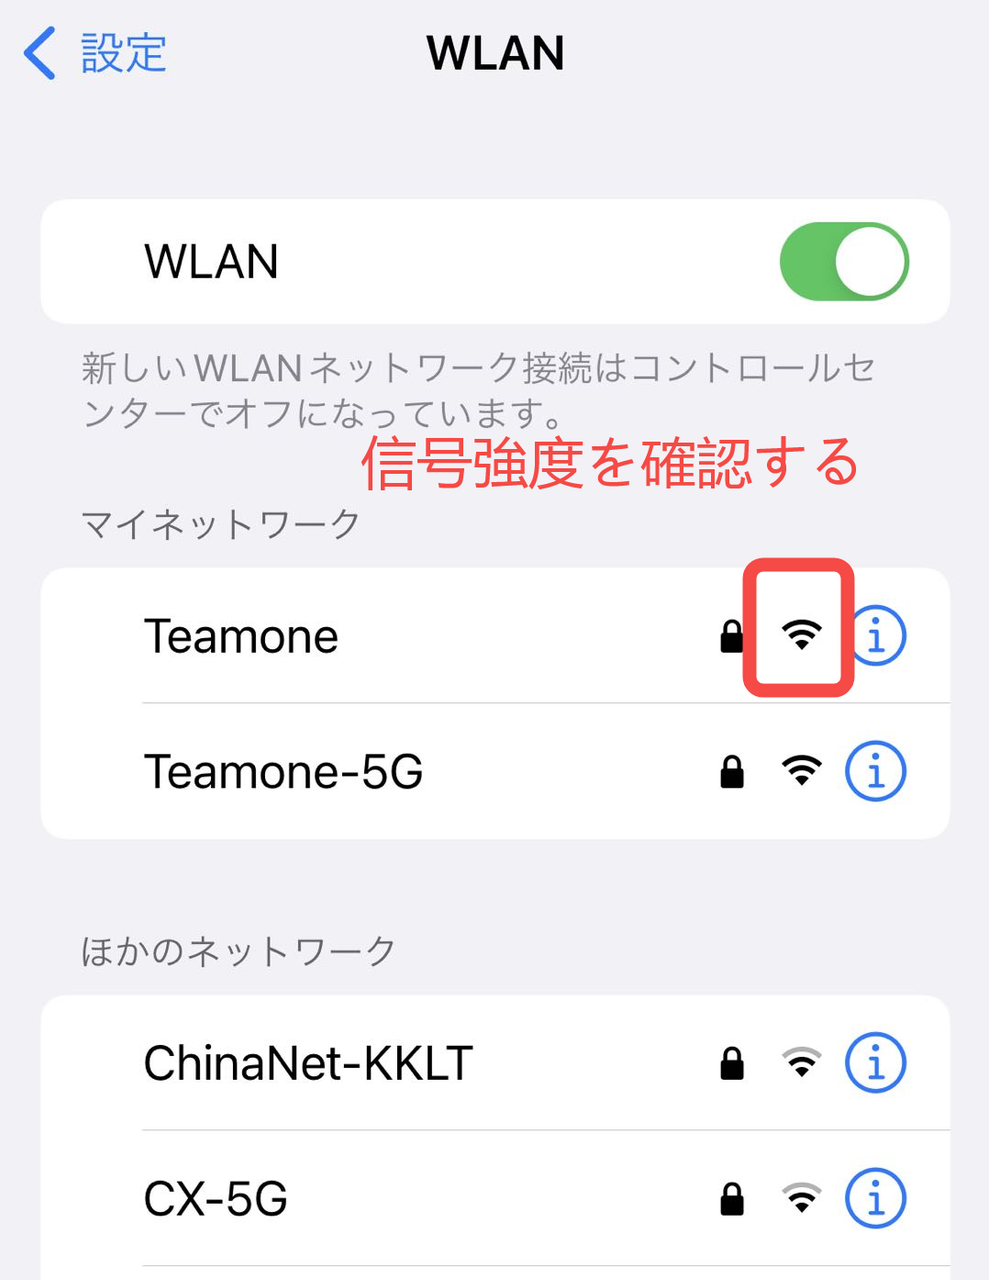 Wi-Fiを確認